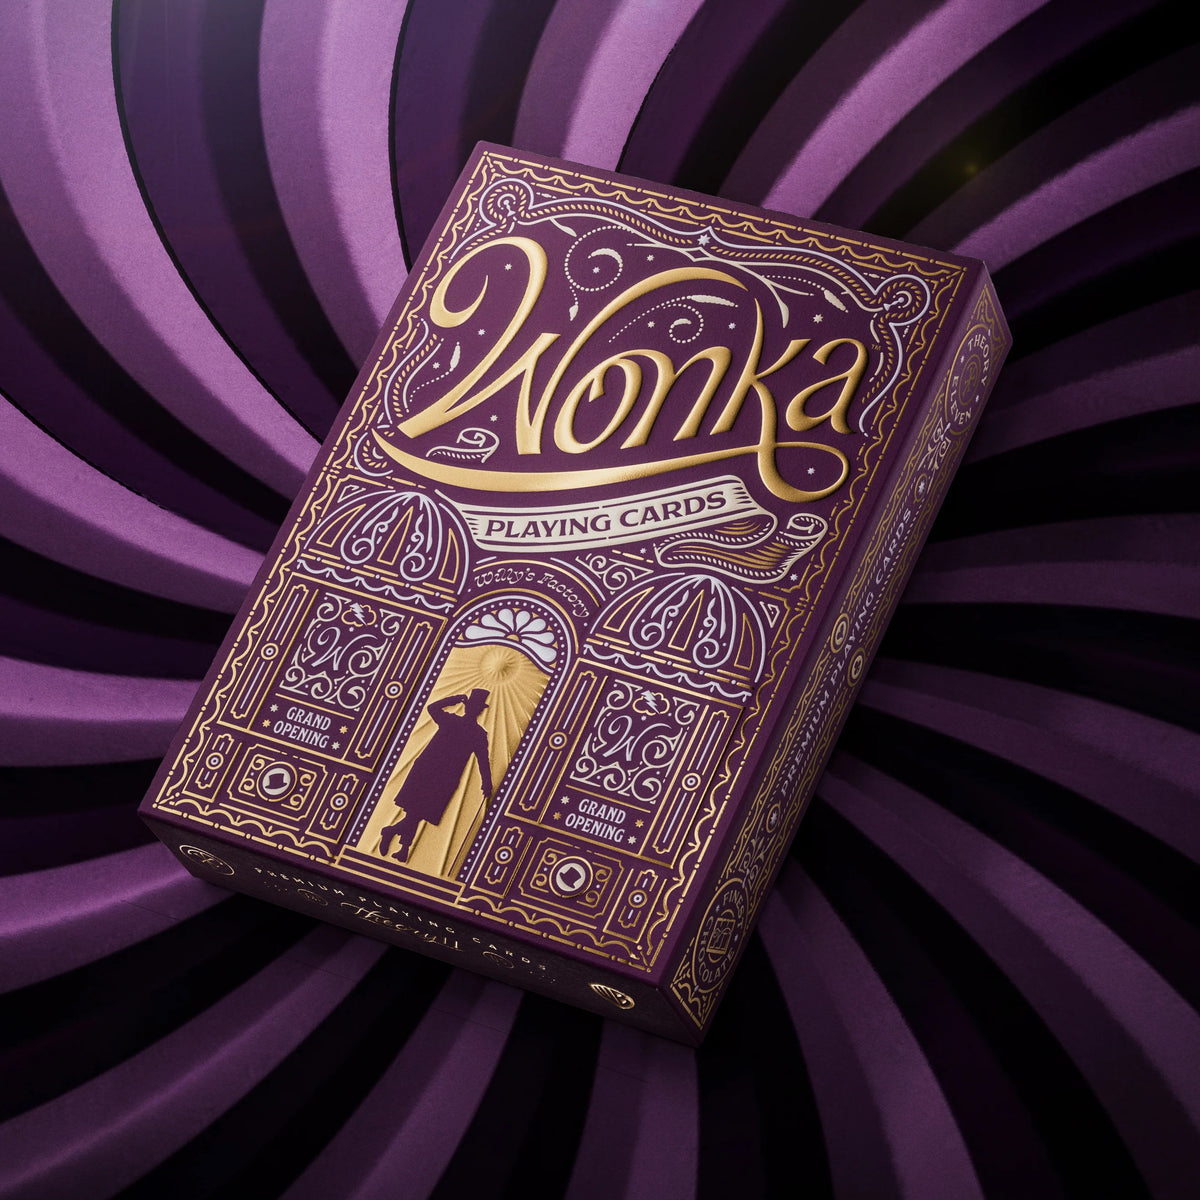 Theory 11 - Wonka Playing Cards